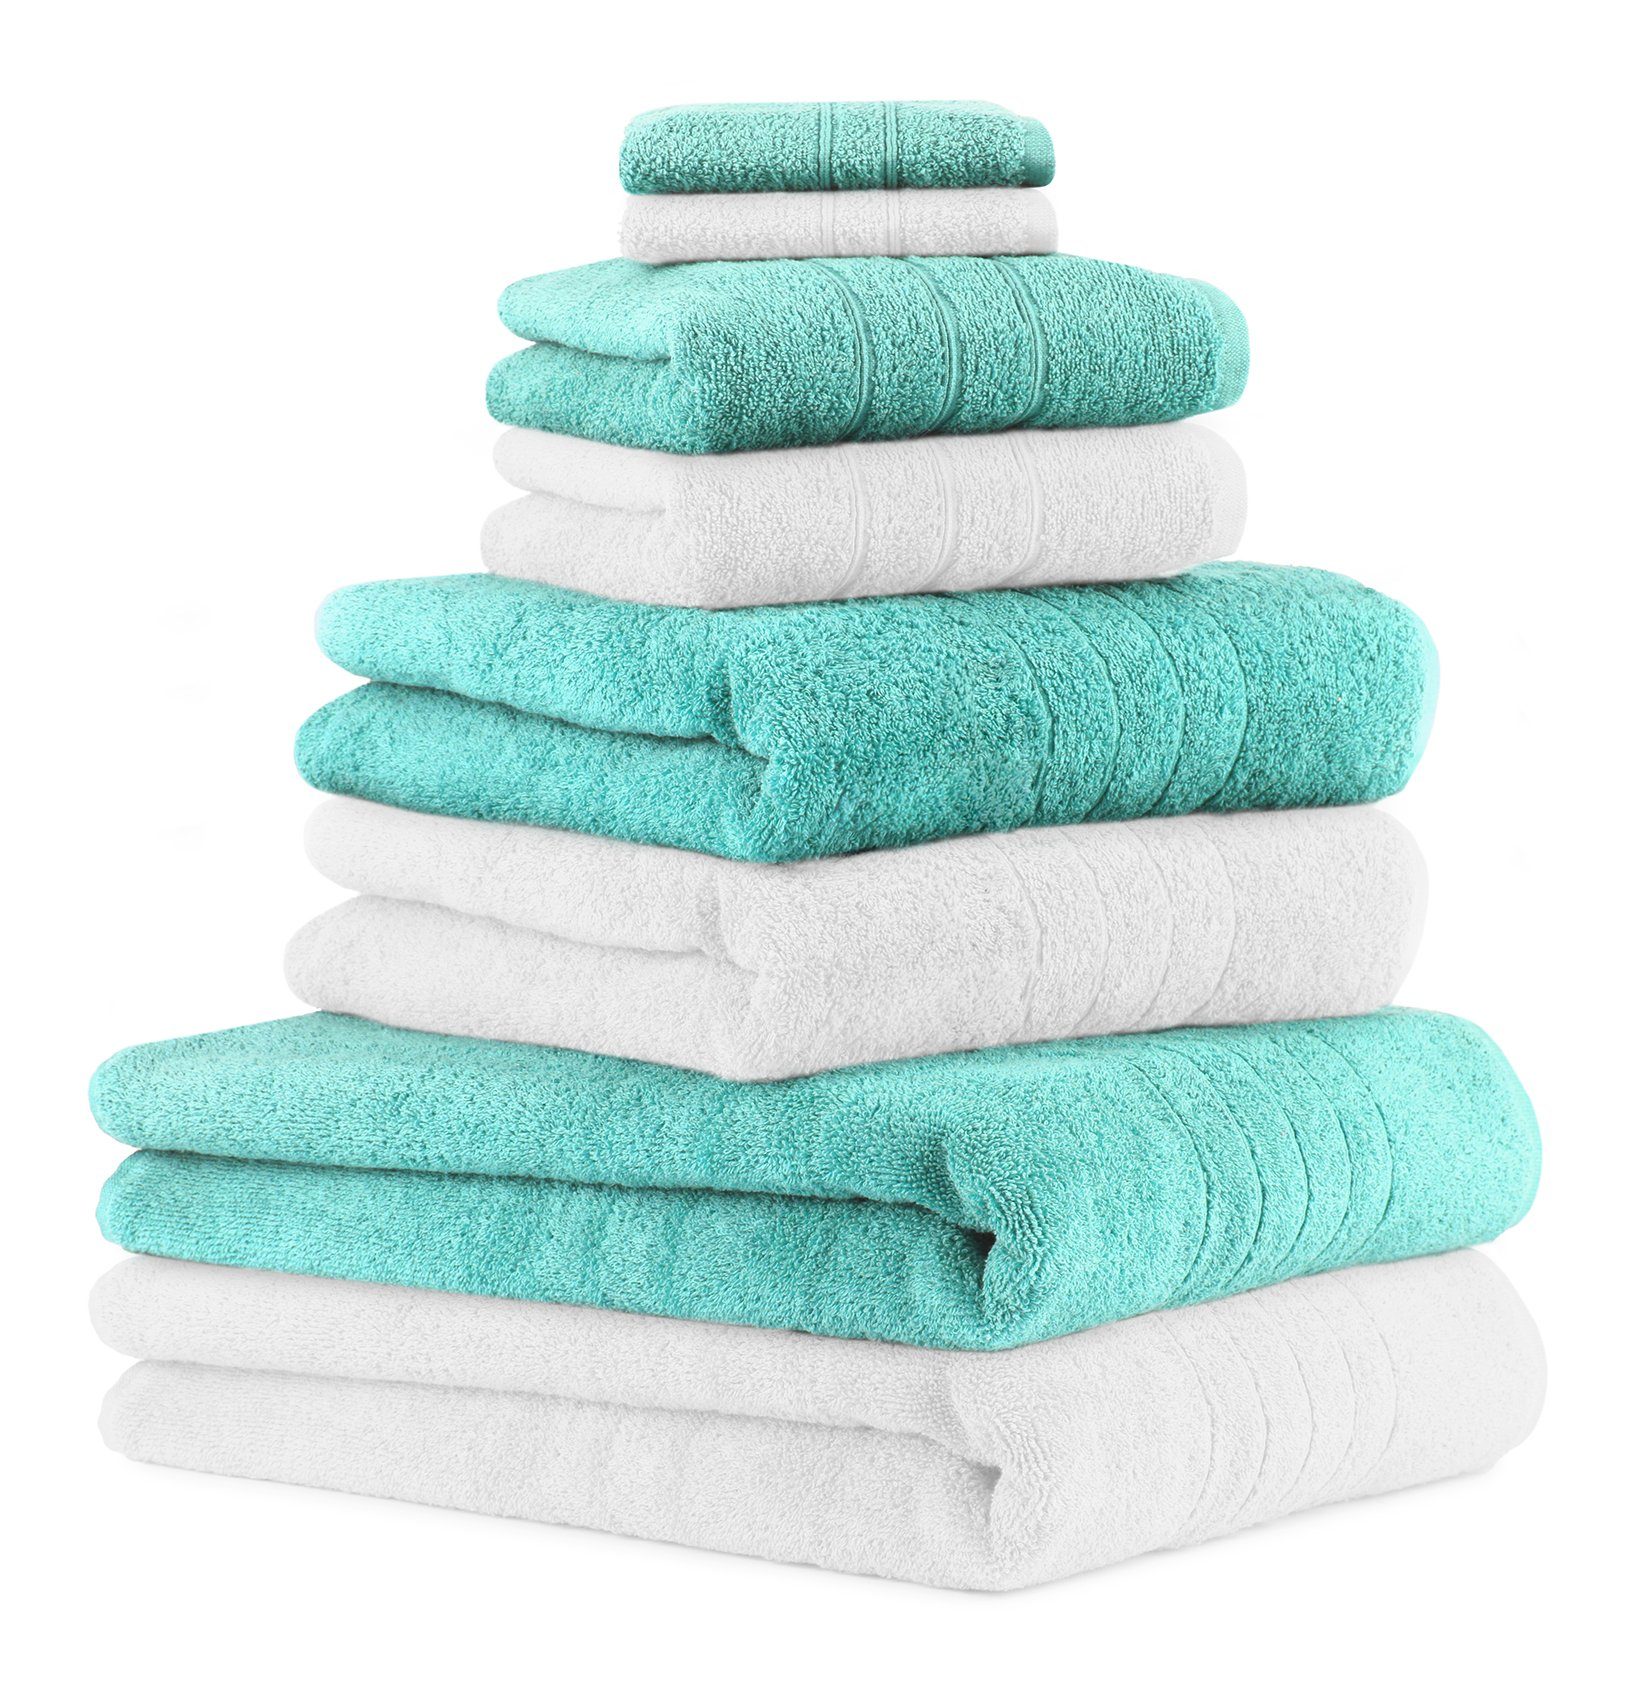 Betz Handtuch Set 8-TLG. Handtuch-Set Deluxe 100% Baumwolle 2 Badetücher 2 Duschtücher 2 Handtücher 2 Seiftücher Farbe weiß und türkis, 100% Baumwolle, (8-tlg)